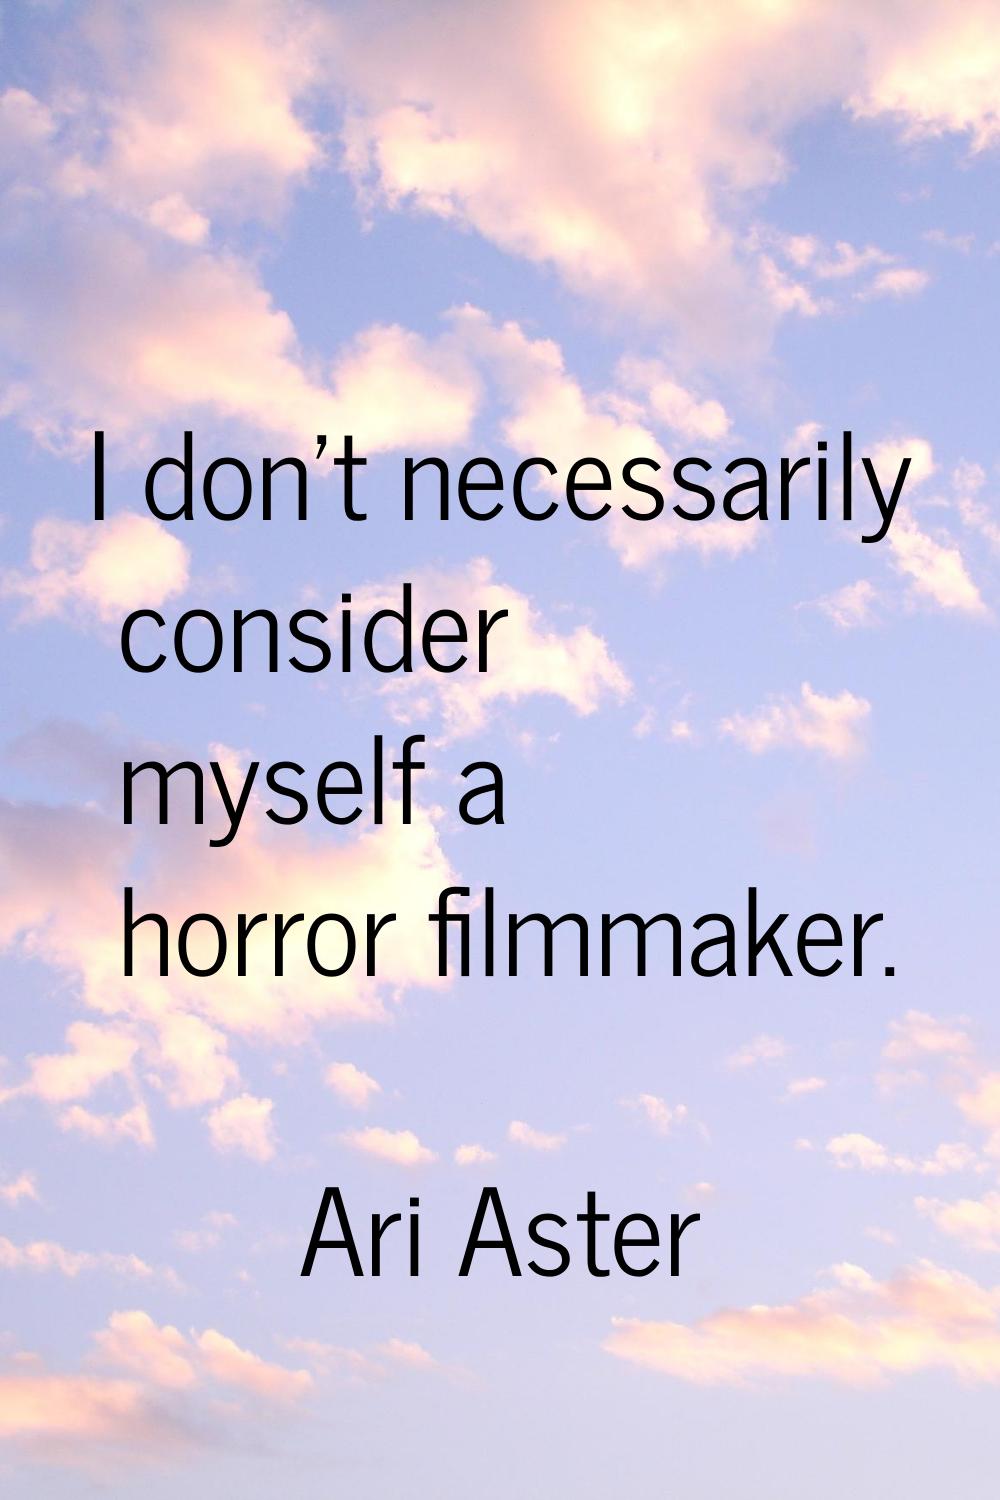 I don't necessarily consider myself a horror filmmaker.